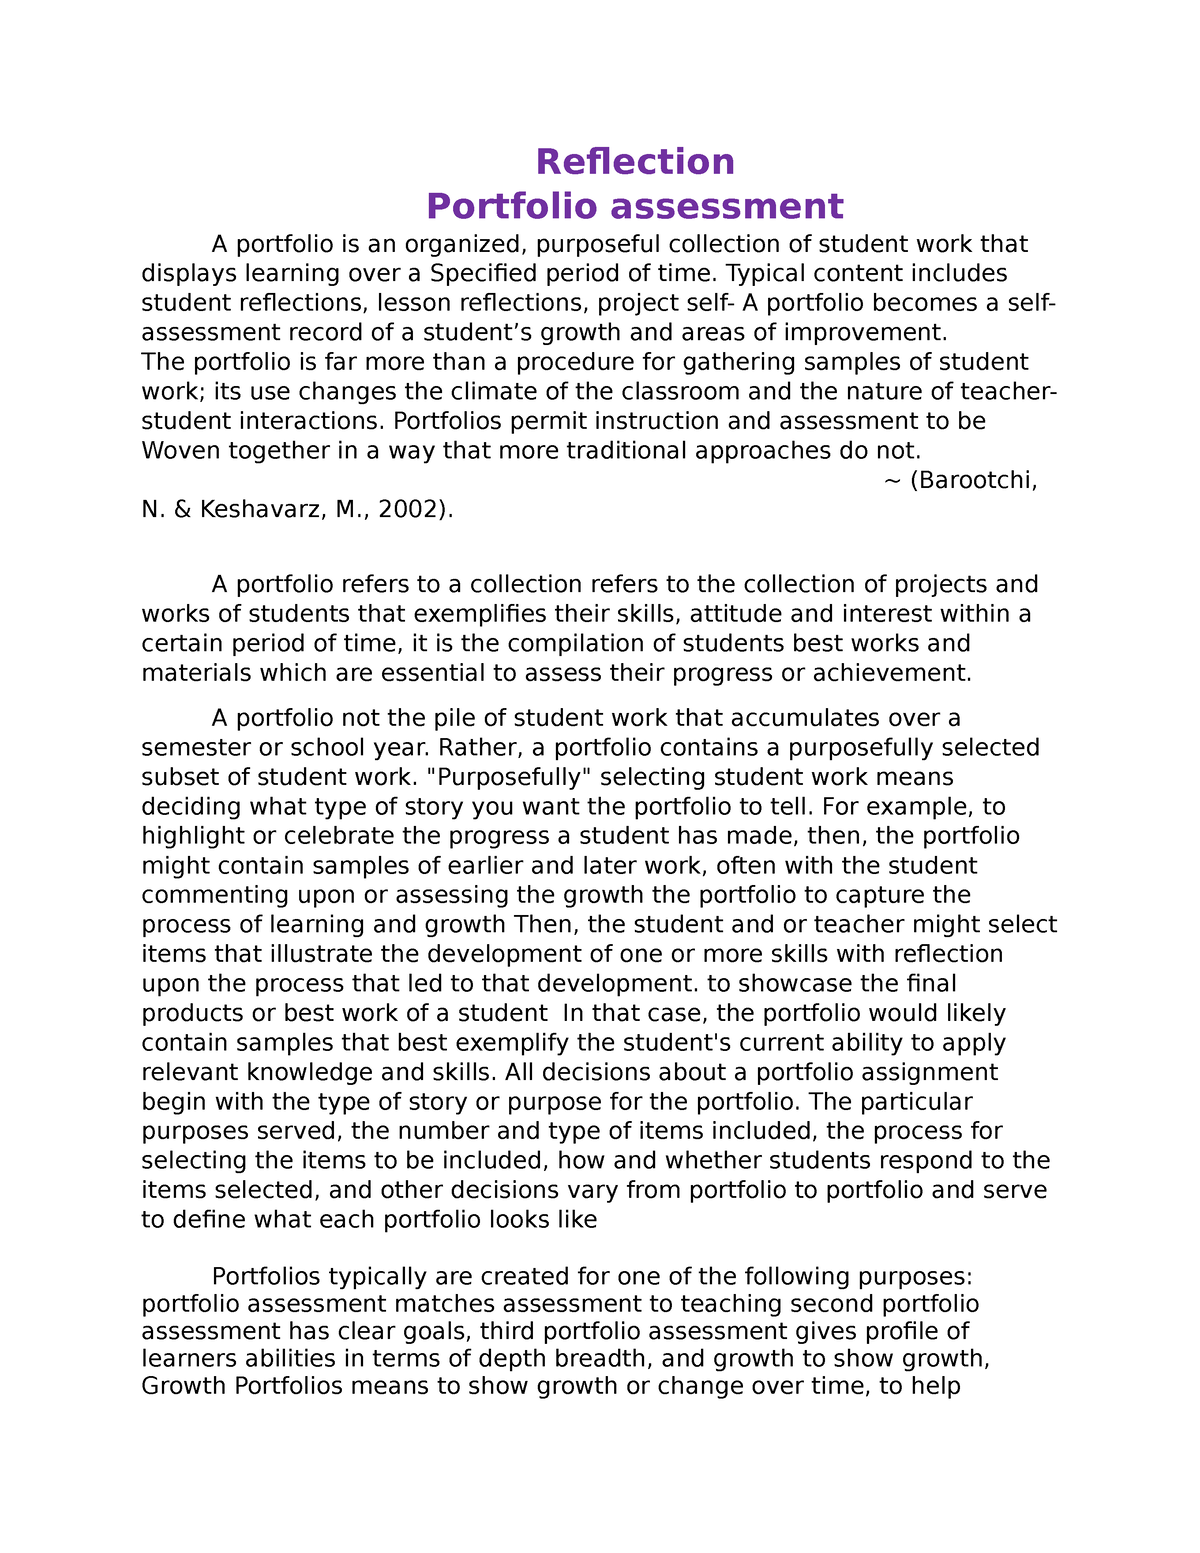 reflection about portfolio essay